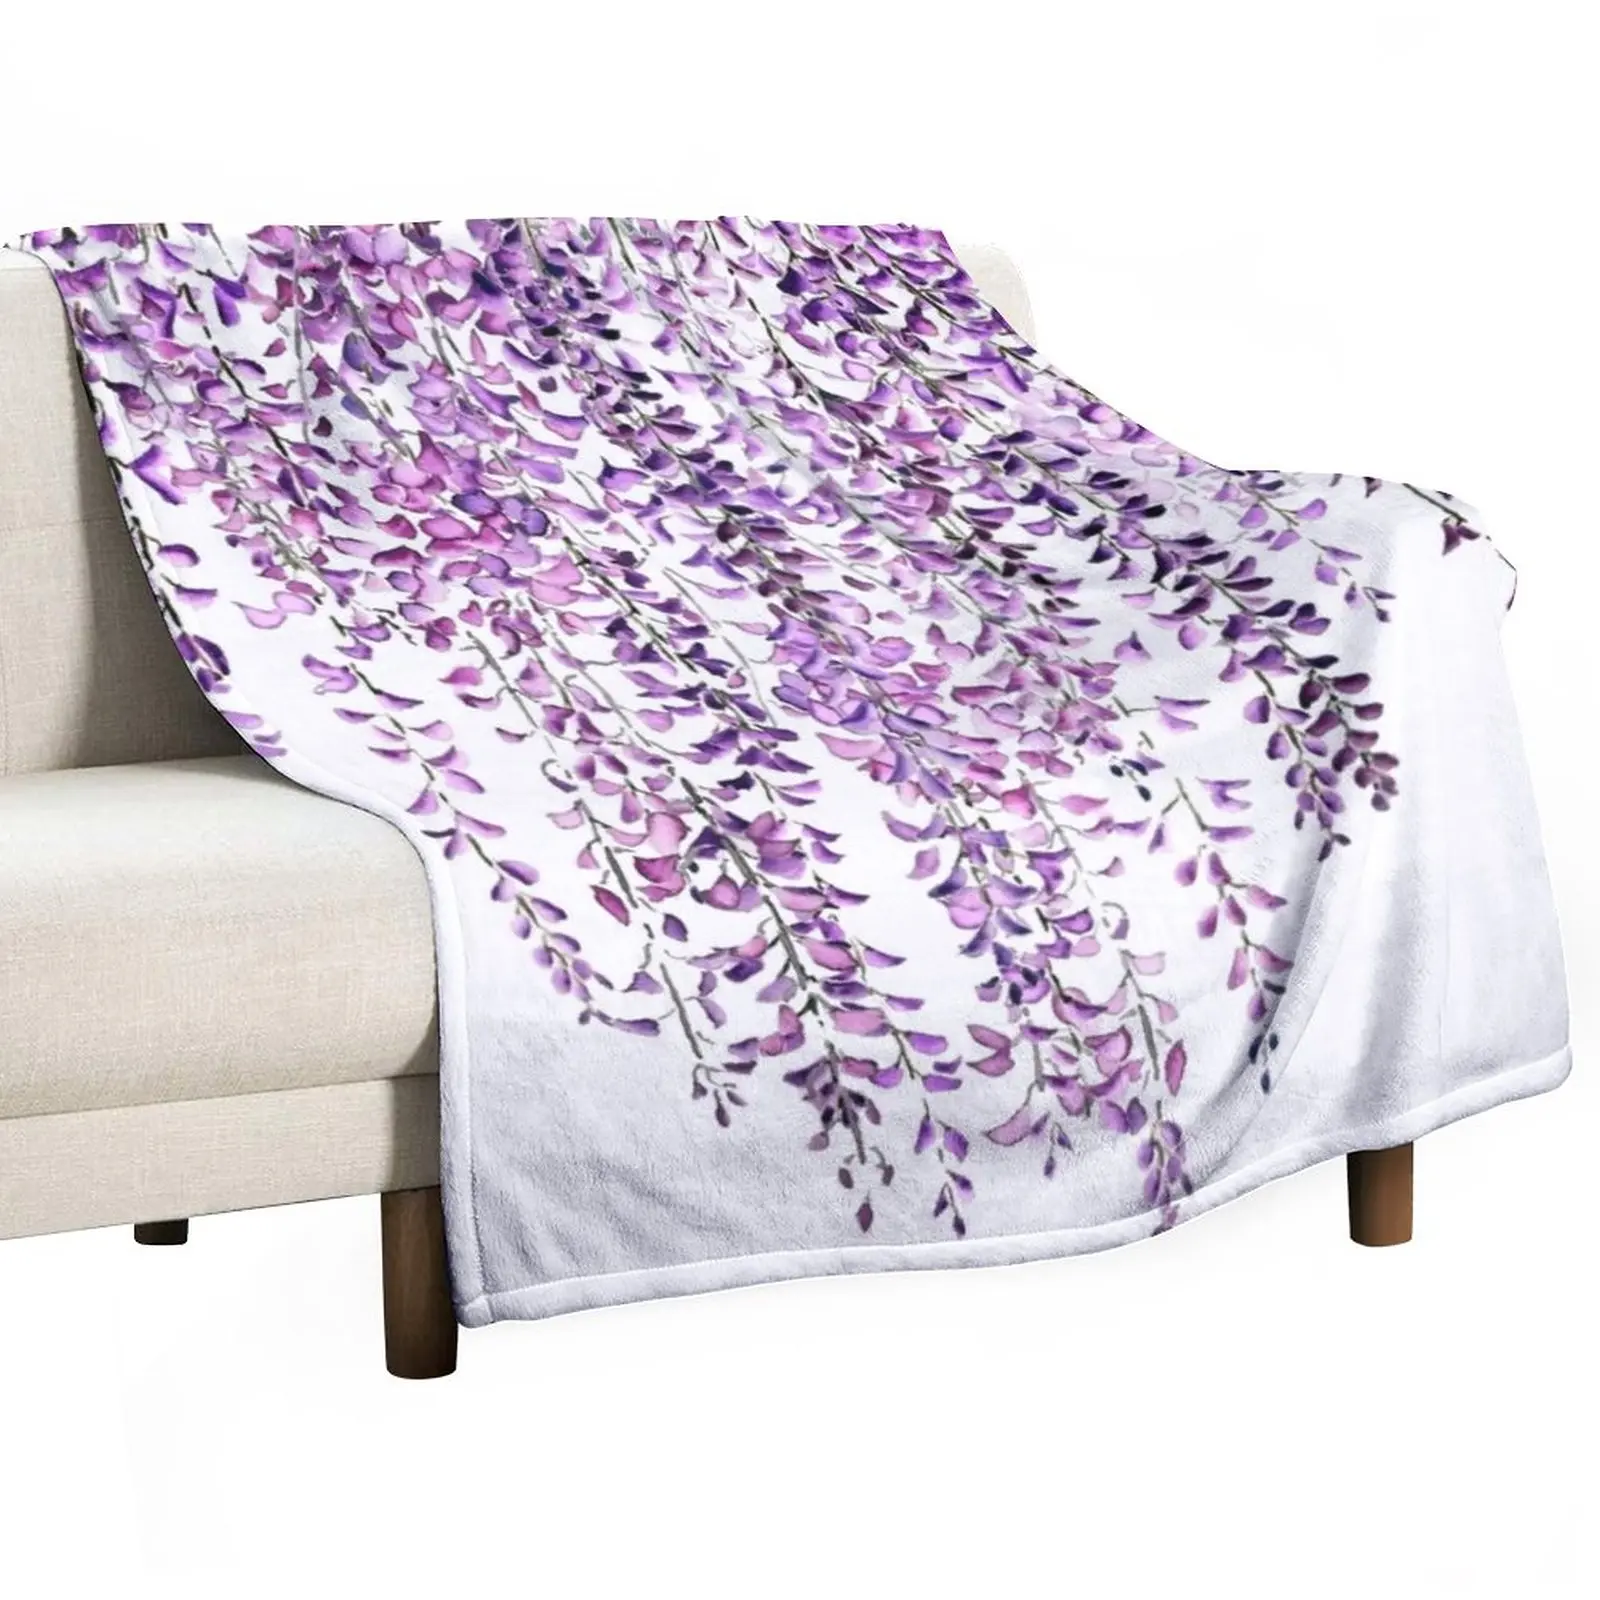 

purple wisteriain bloom Throw Blanket Blankets Sofas Of Decoration Large Blanket Loose Blanket